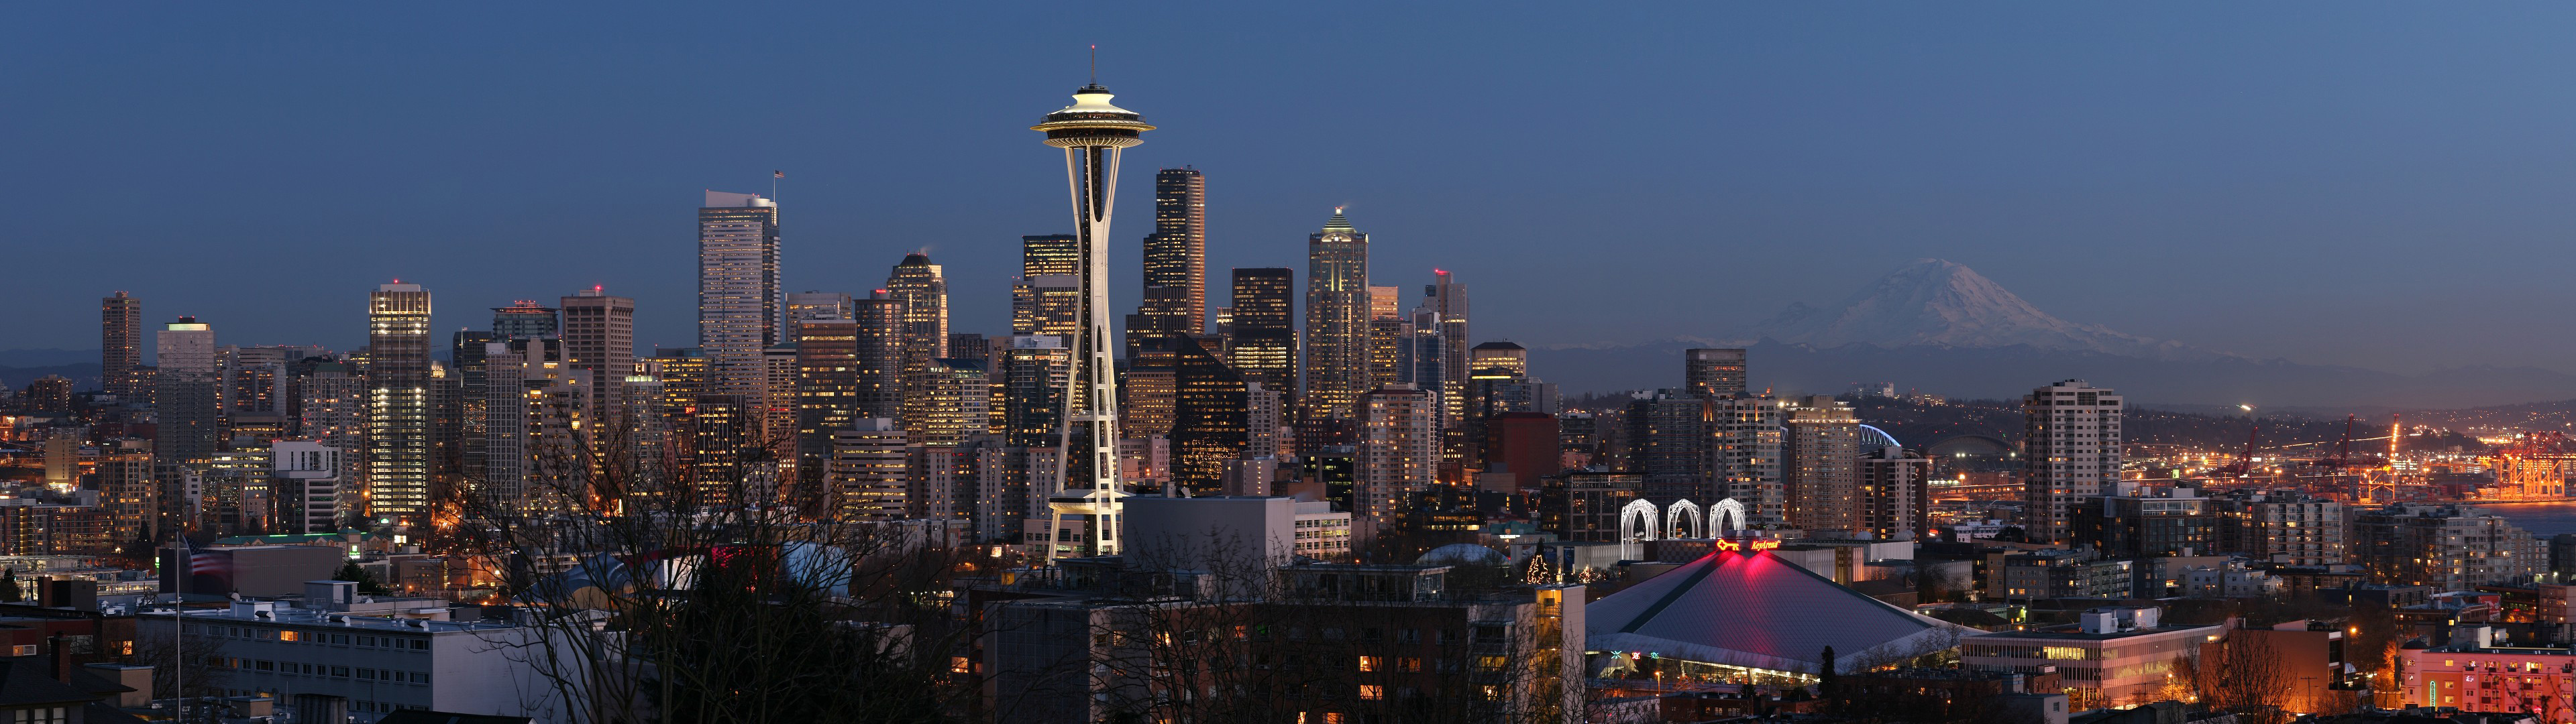 Seattle Skyline, Dual monitor wallpapers, High-resolution images, Stunning views, 3840x1080 Dual Screen Desktop